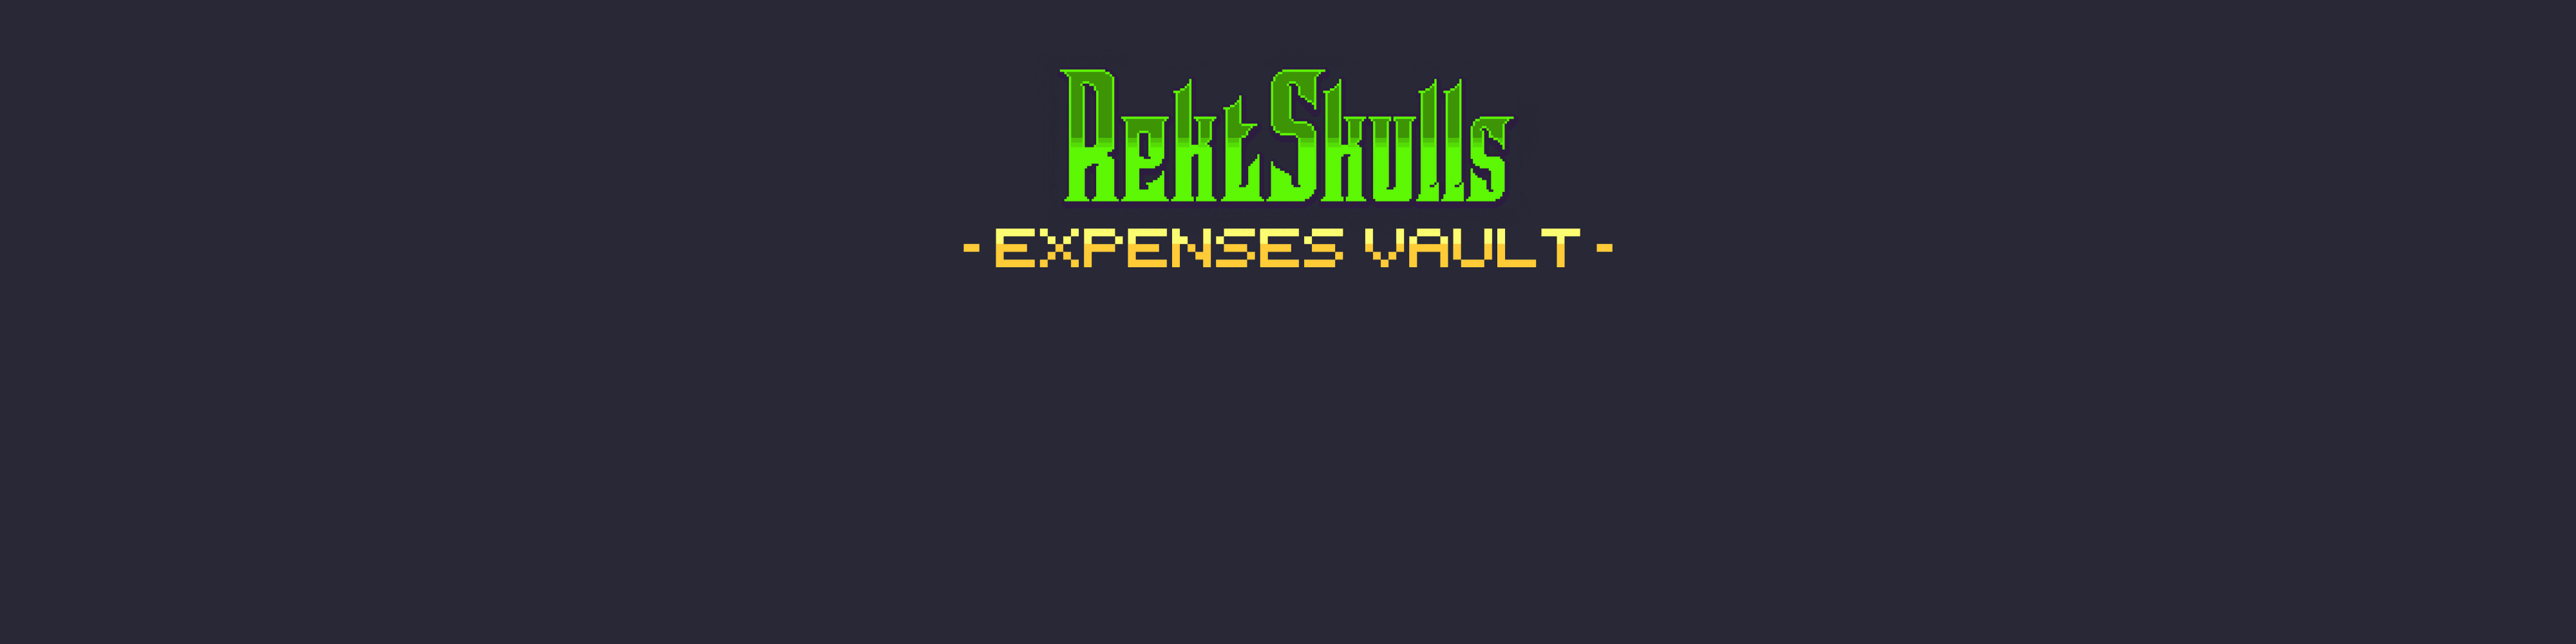 RektSkulls_Expenses_Vault banner